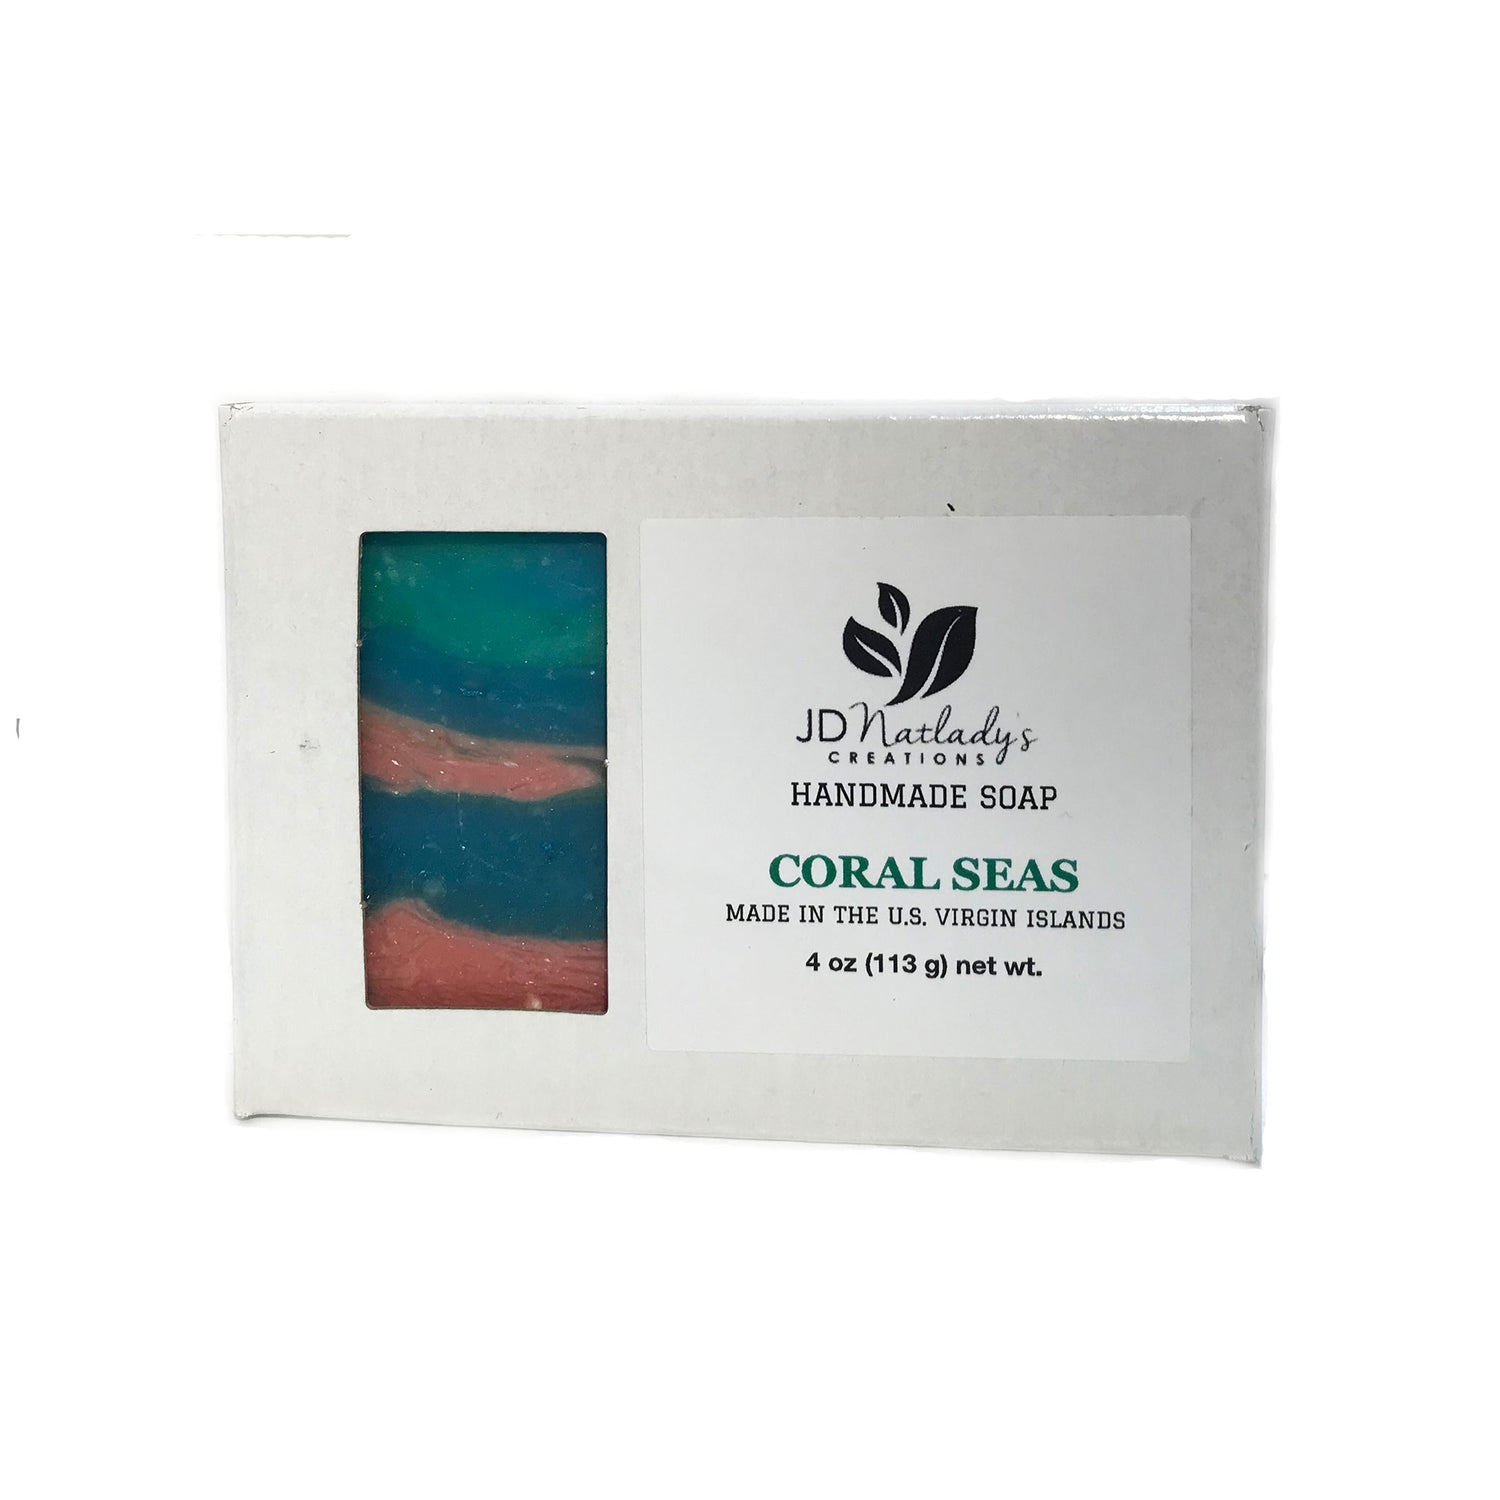 Coral Seas Artisanal Hand Soap at JDNatlady's Creations